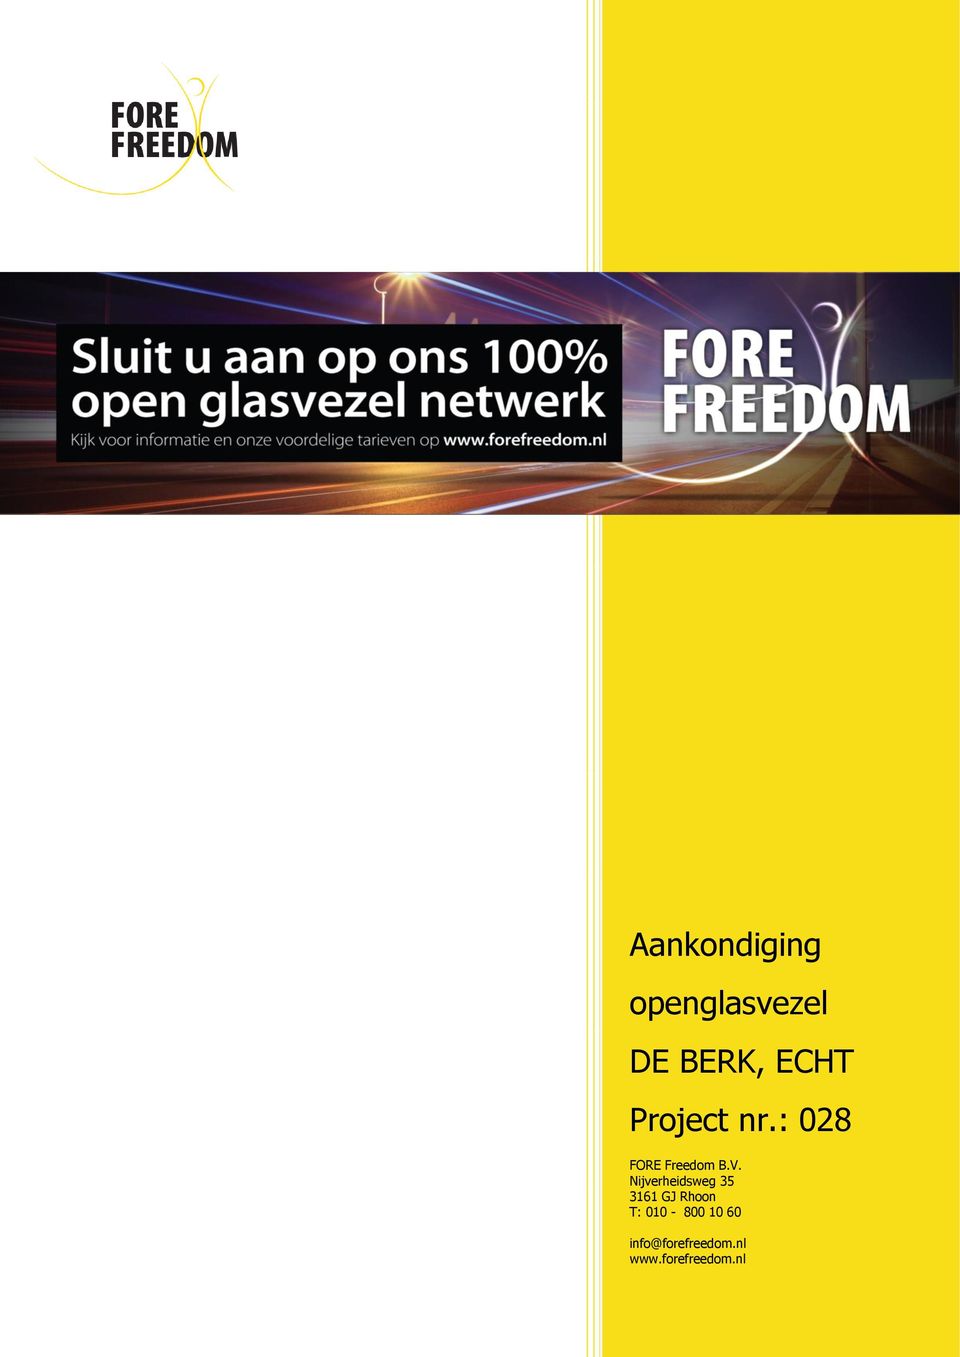 010-800 10 60 info@forefreedom.nl www.forefreedom.nl KvK 24.